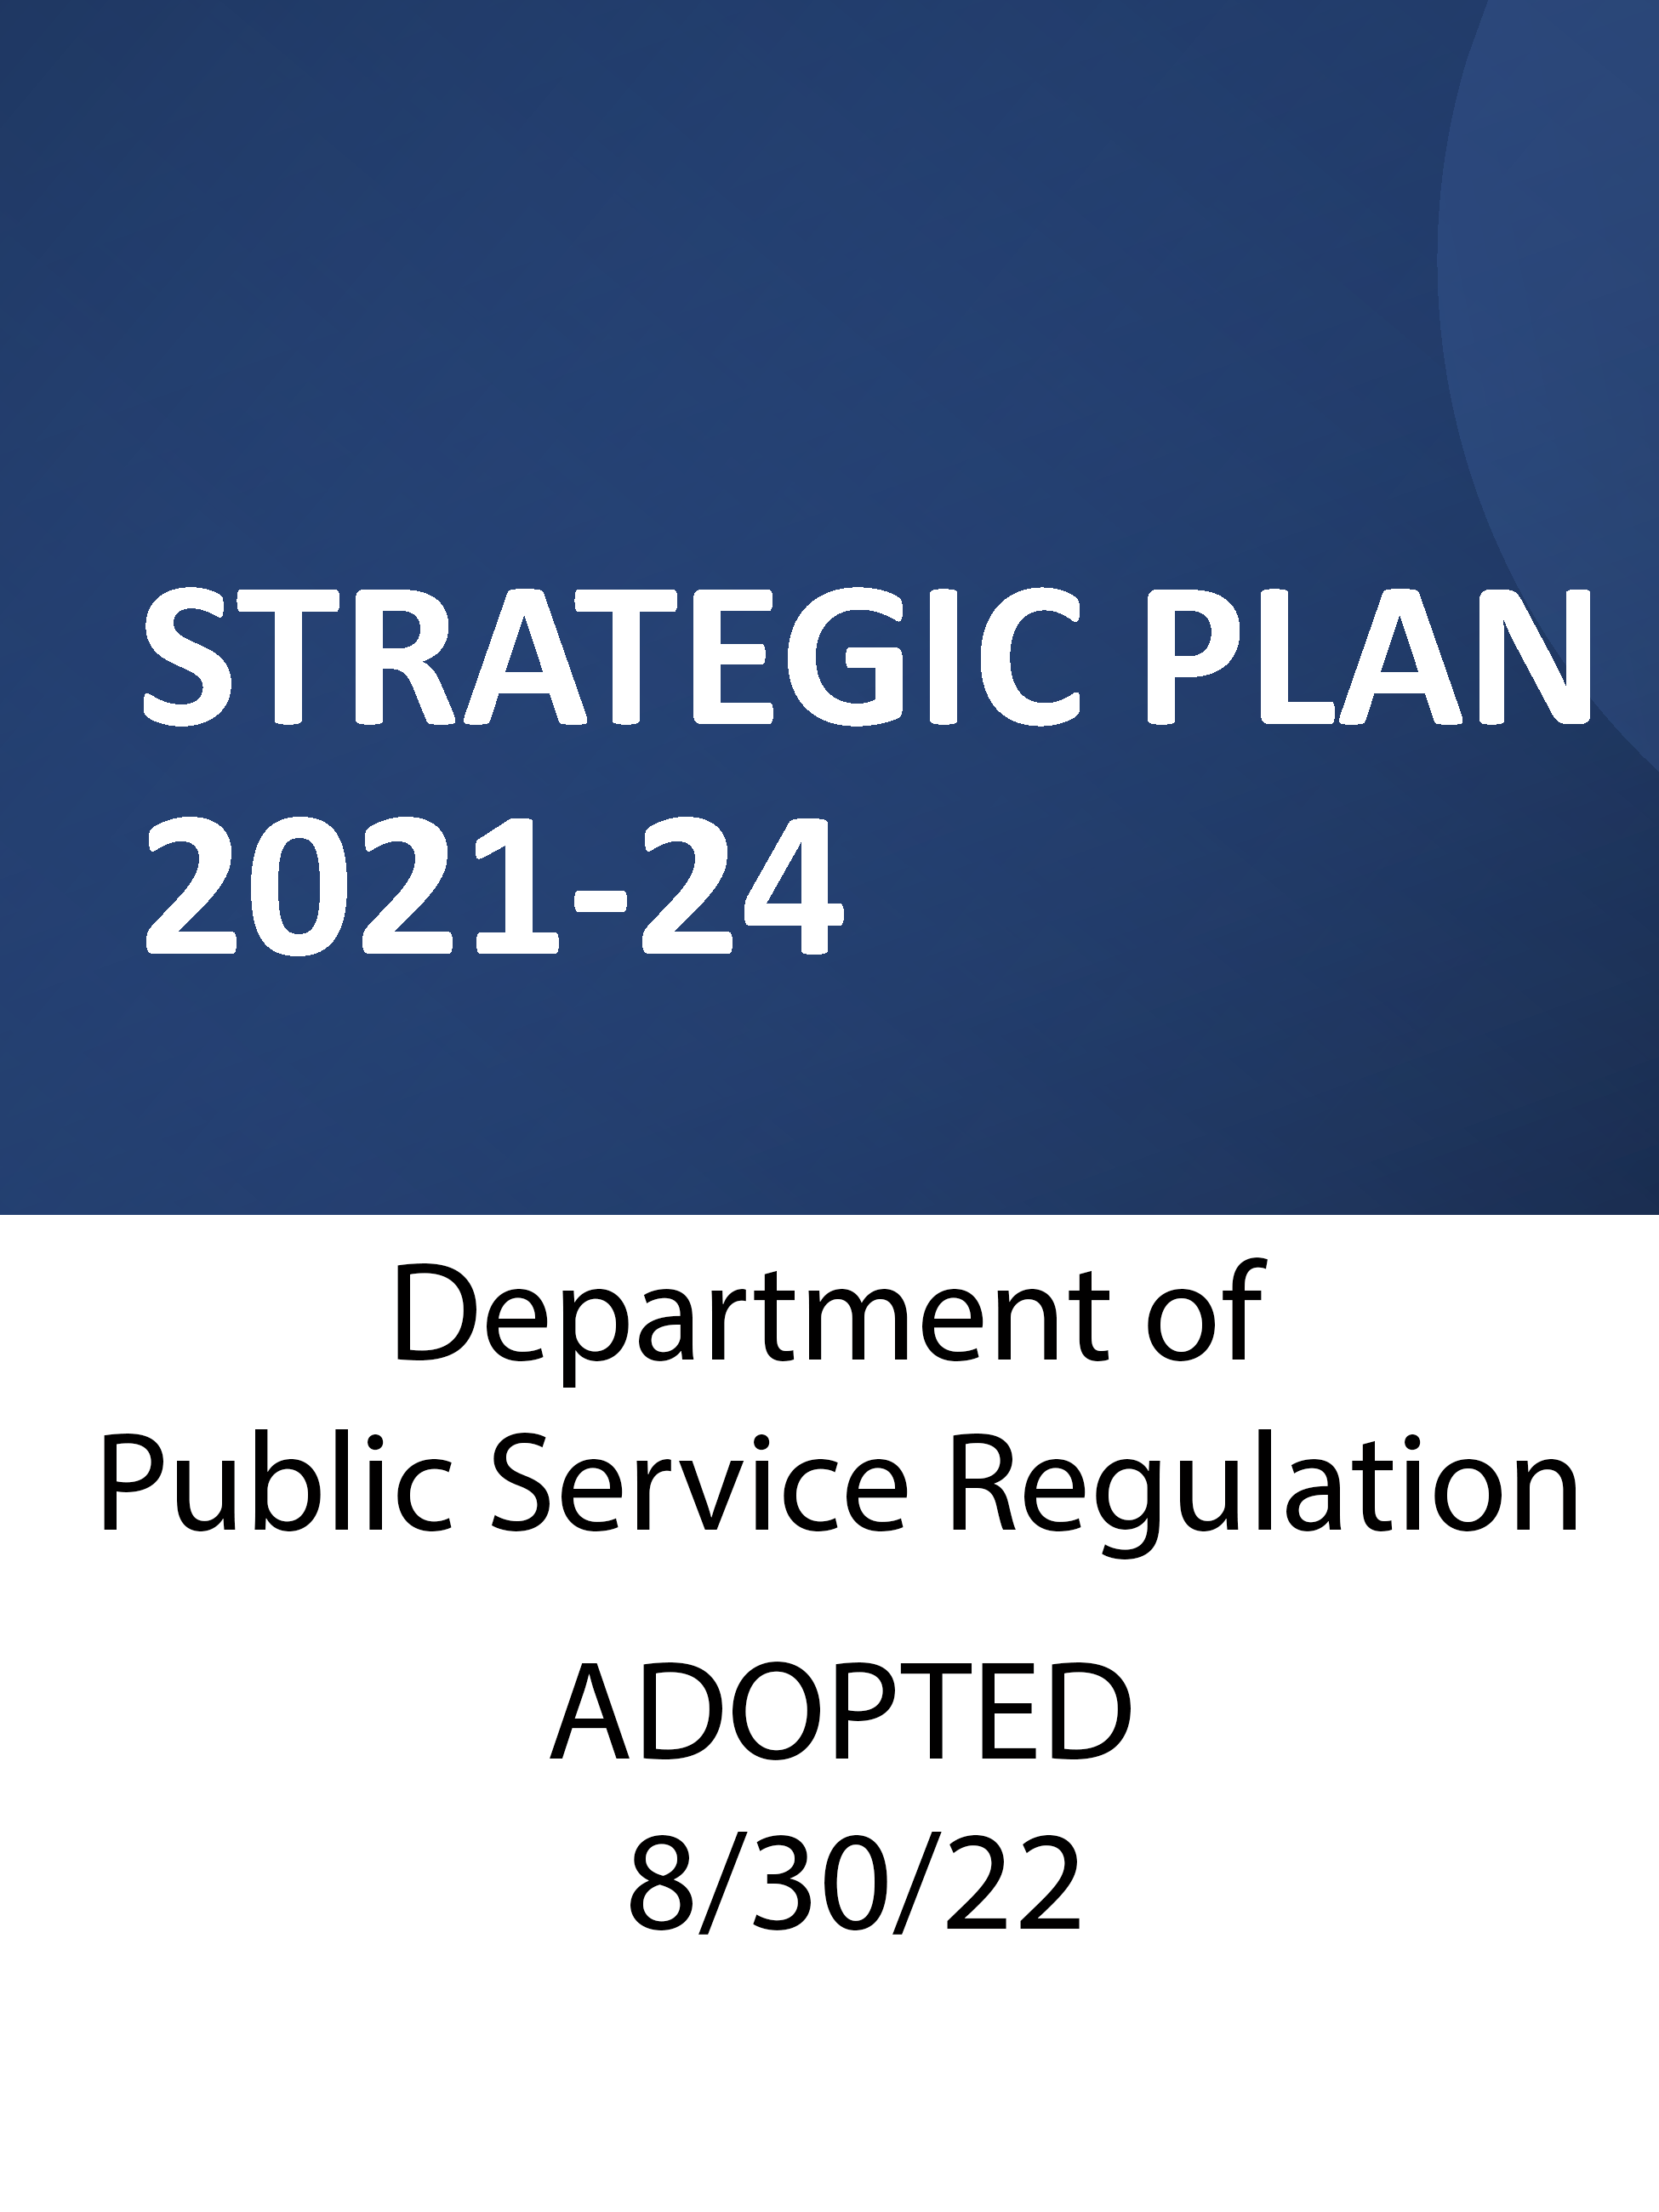 PSC Strategic Plan